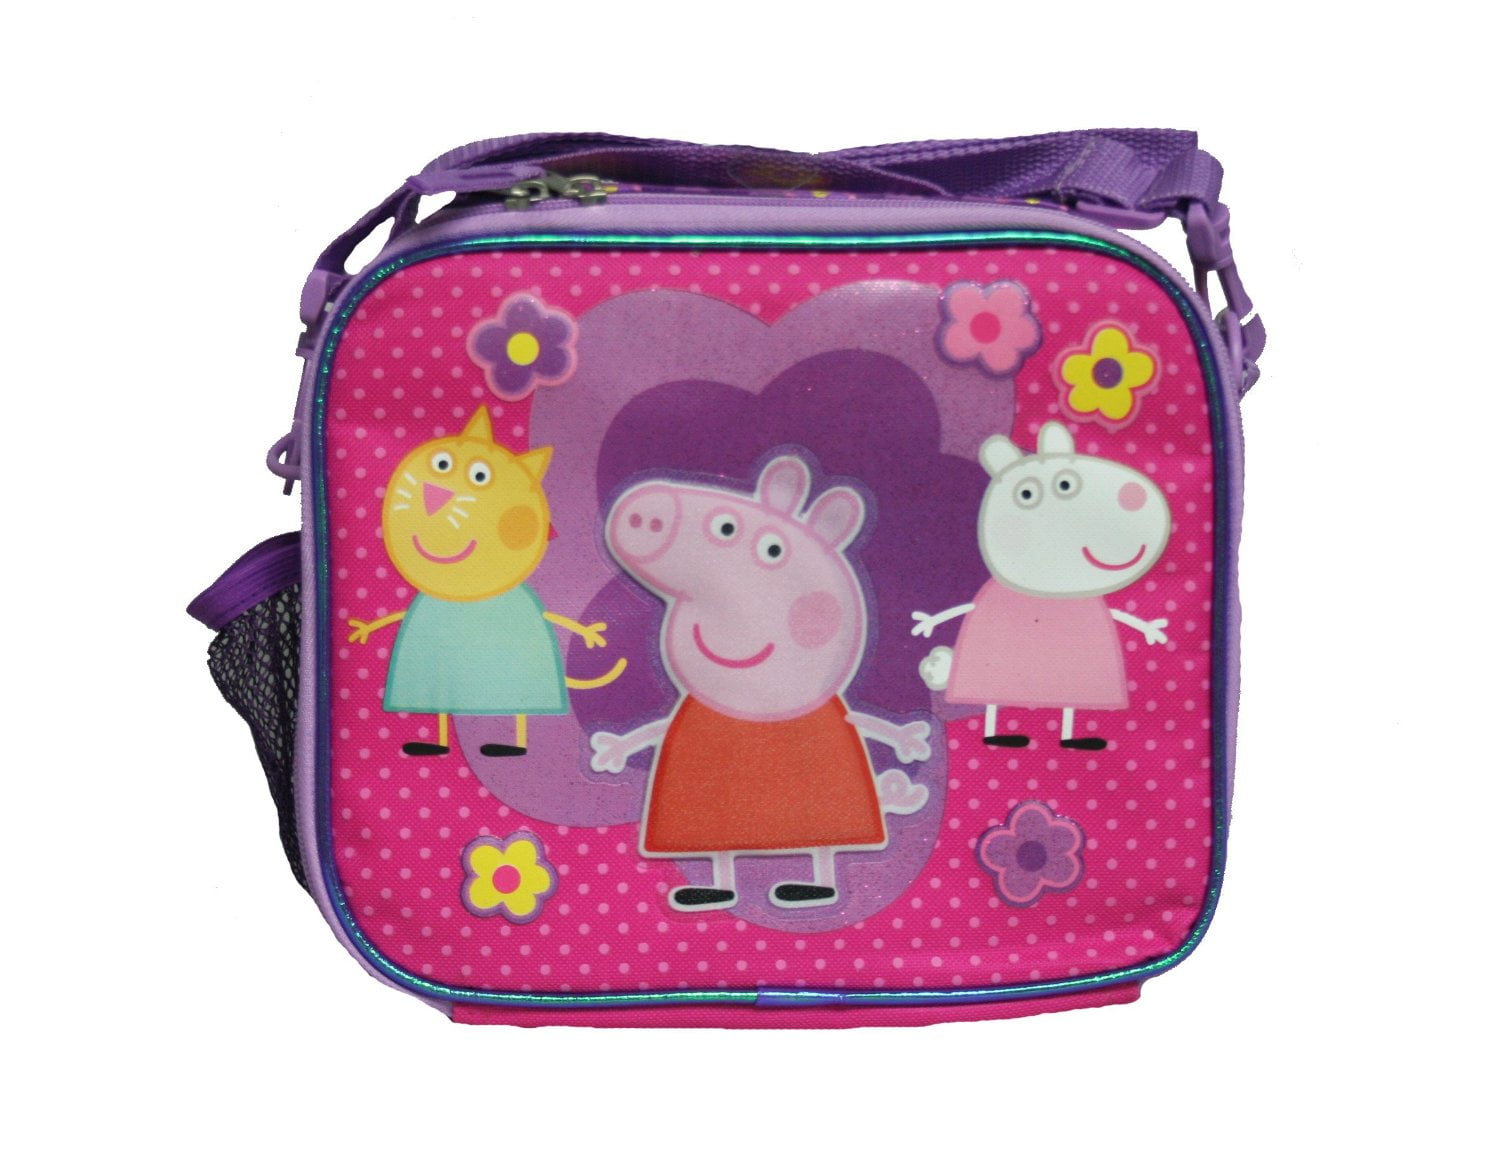 Lunch Bag - Peppa Pig - Pink 10 Kit Case Girls School New 843340137667 